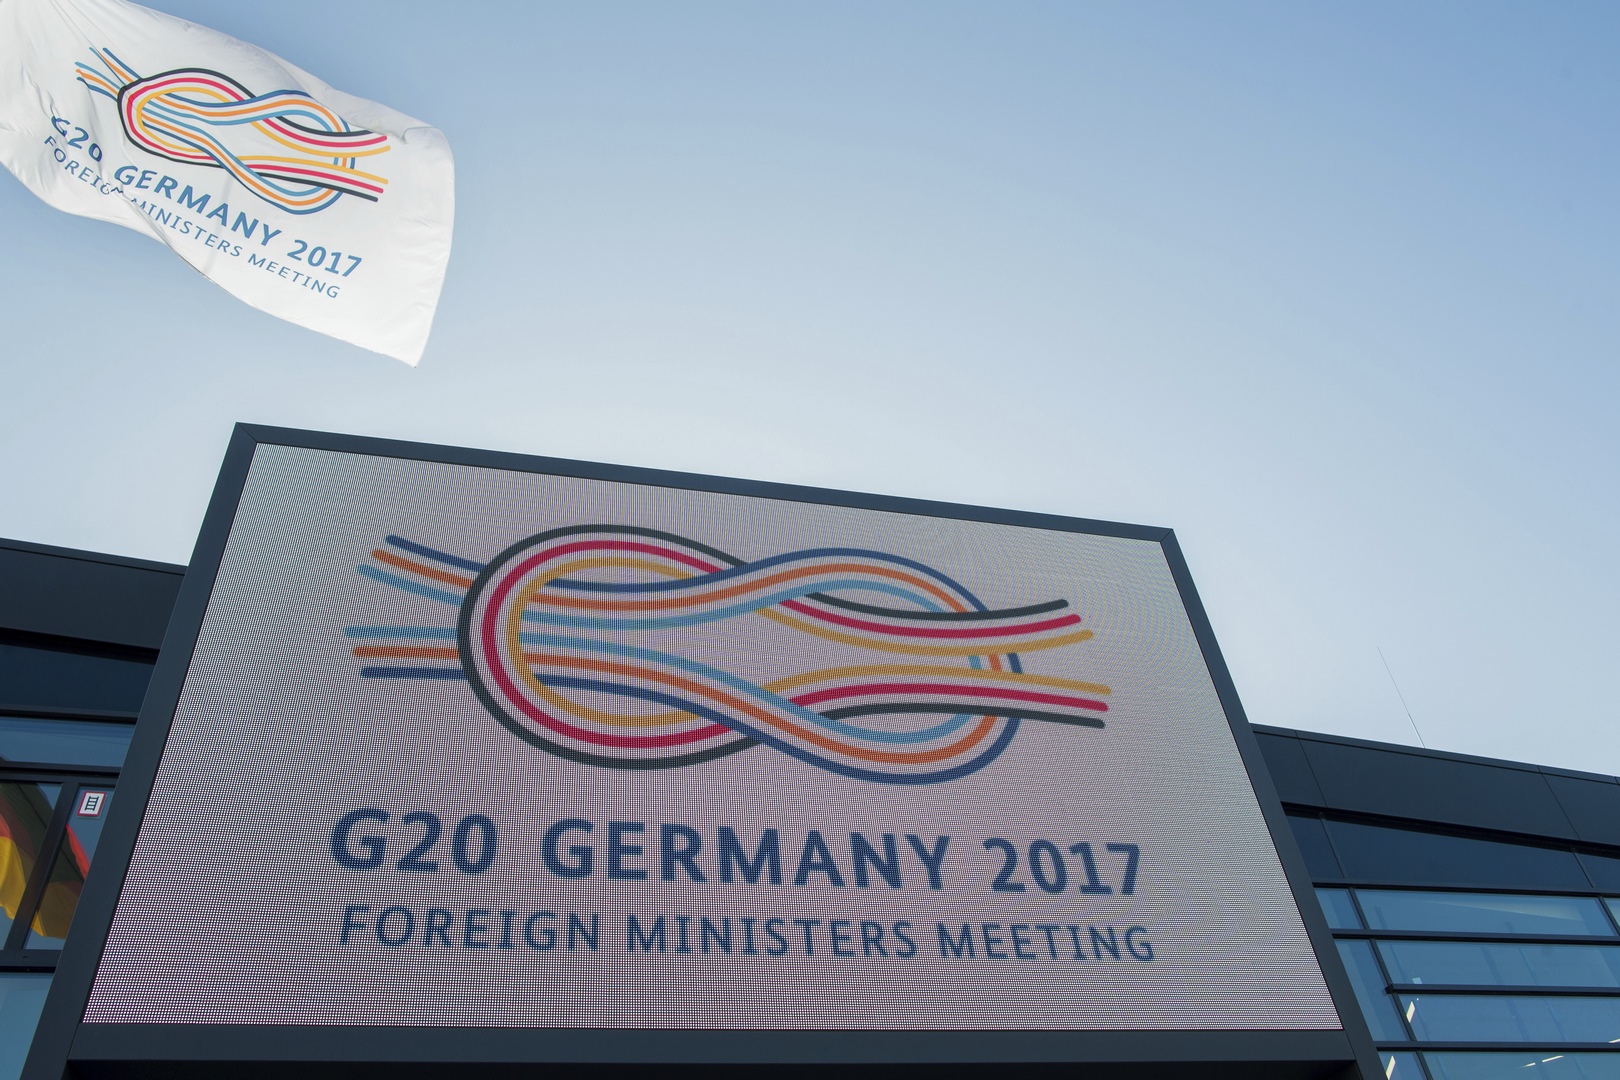 El logo de la cumbre "G-20 Alemania 2017" visto en el exterior del World Conference Center de Bonn, Alemania (AP)